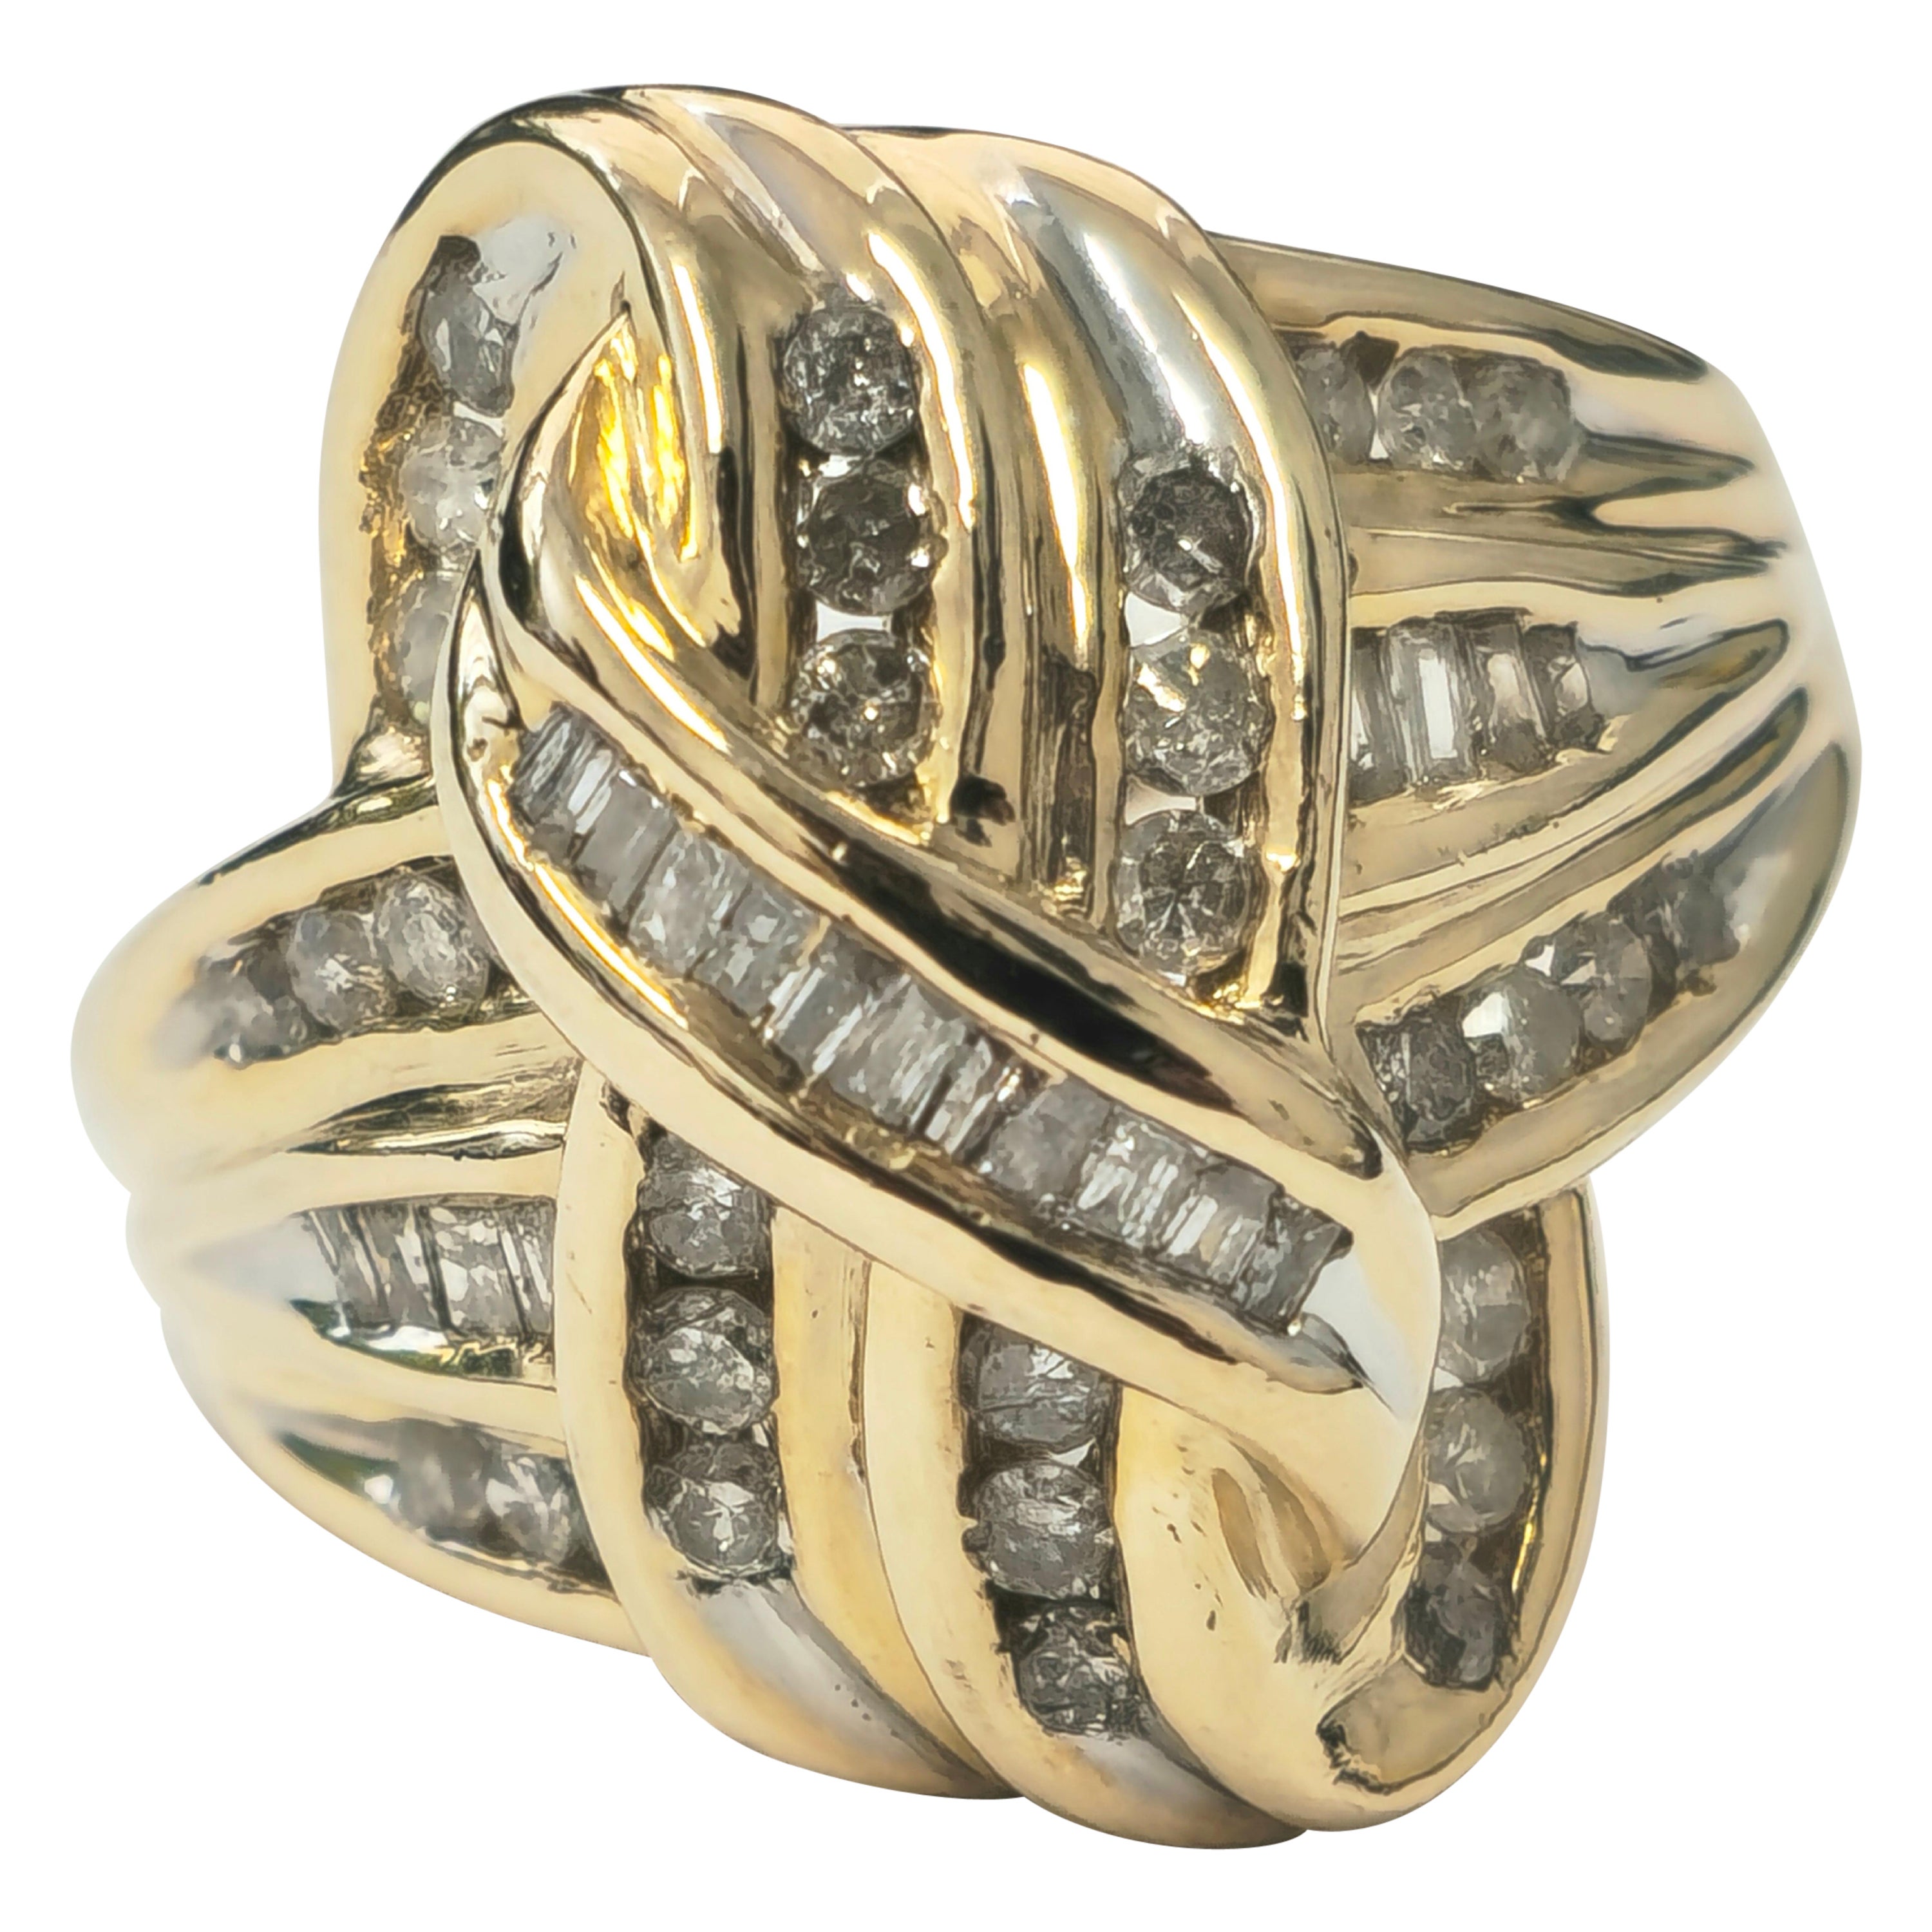 Art Deco Style Womens 2.10 Carat Diamond Engagement Ring in 14k Yellow Gold.